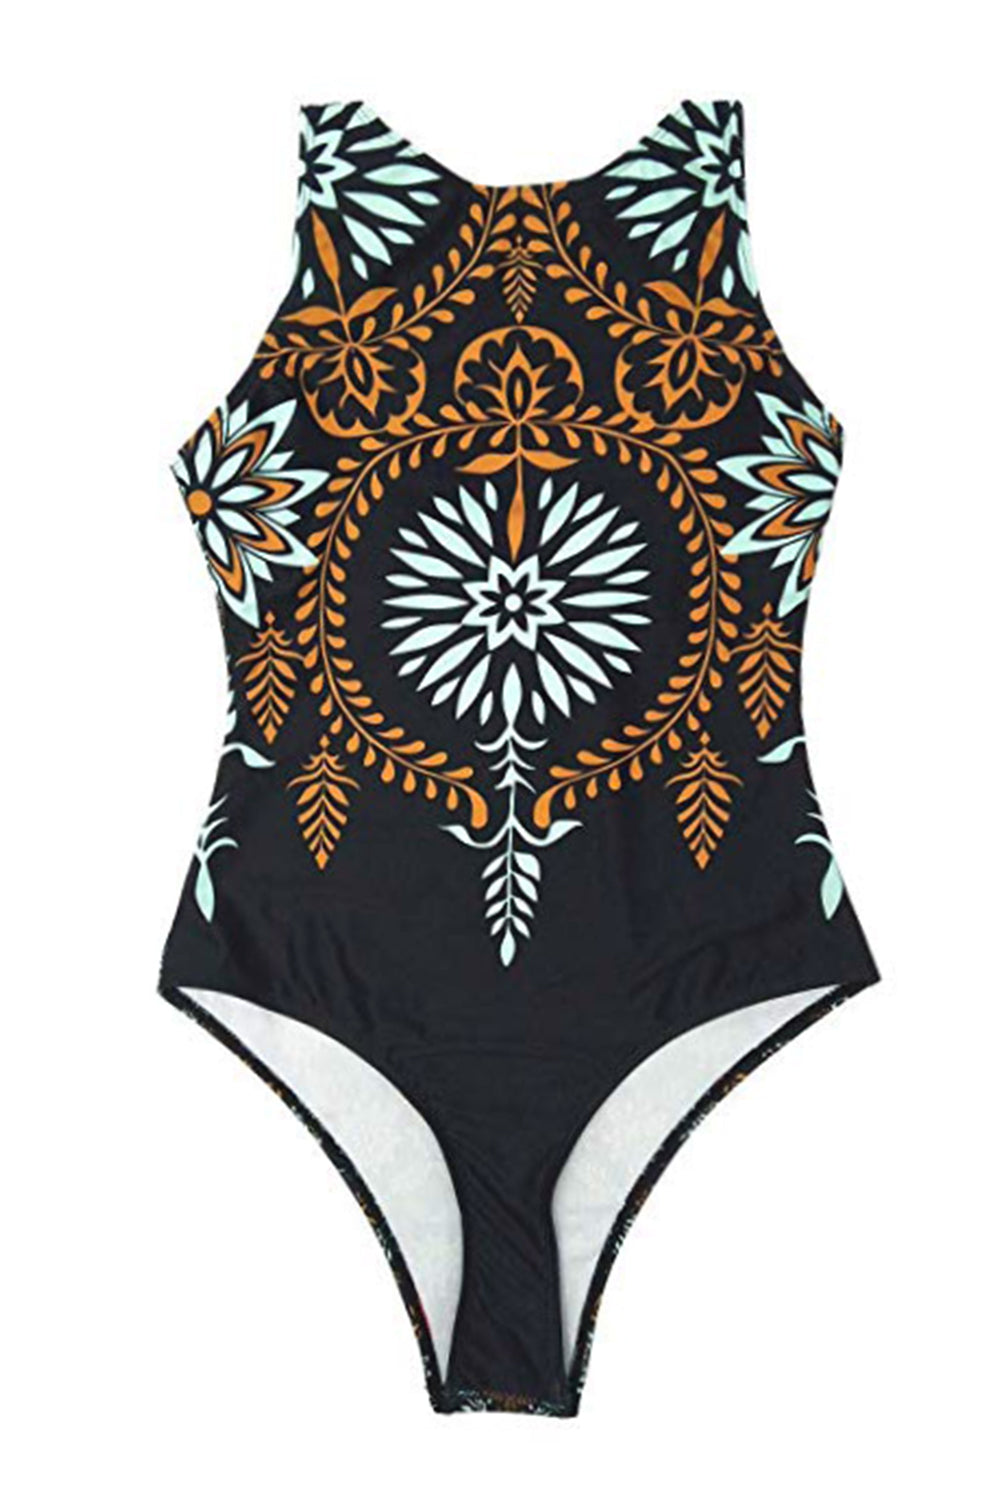 Iyasson Women's Vintage Pattern O-Neck Swimsuit